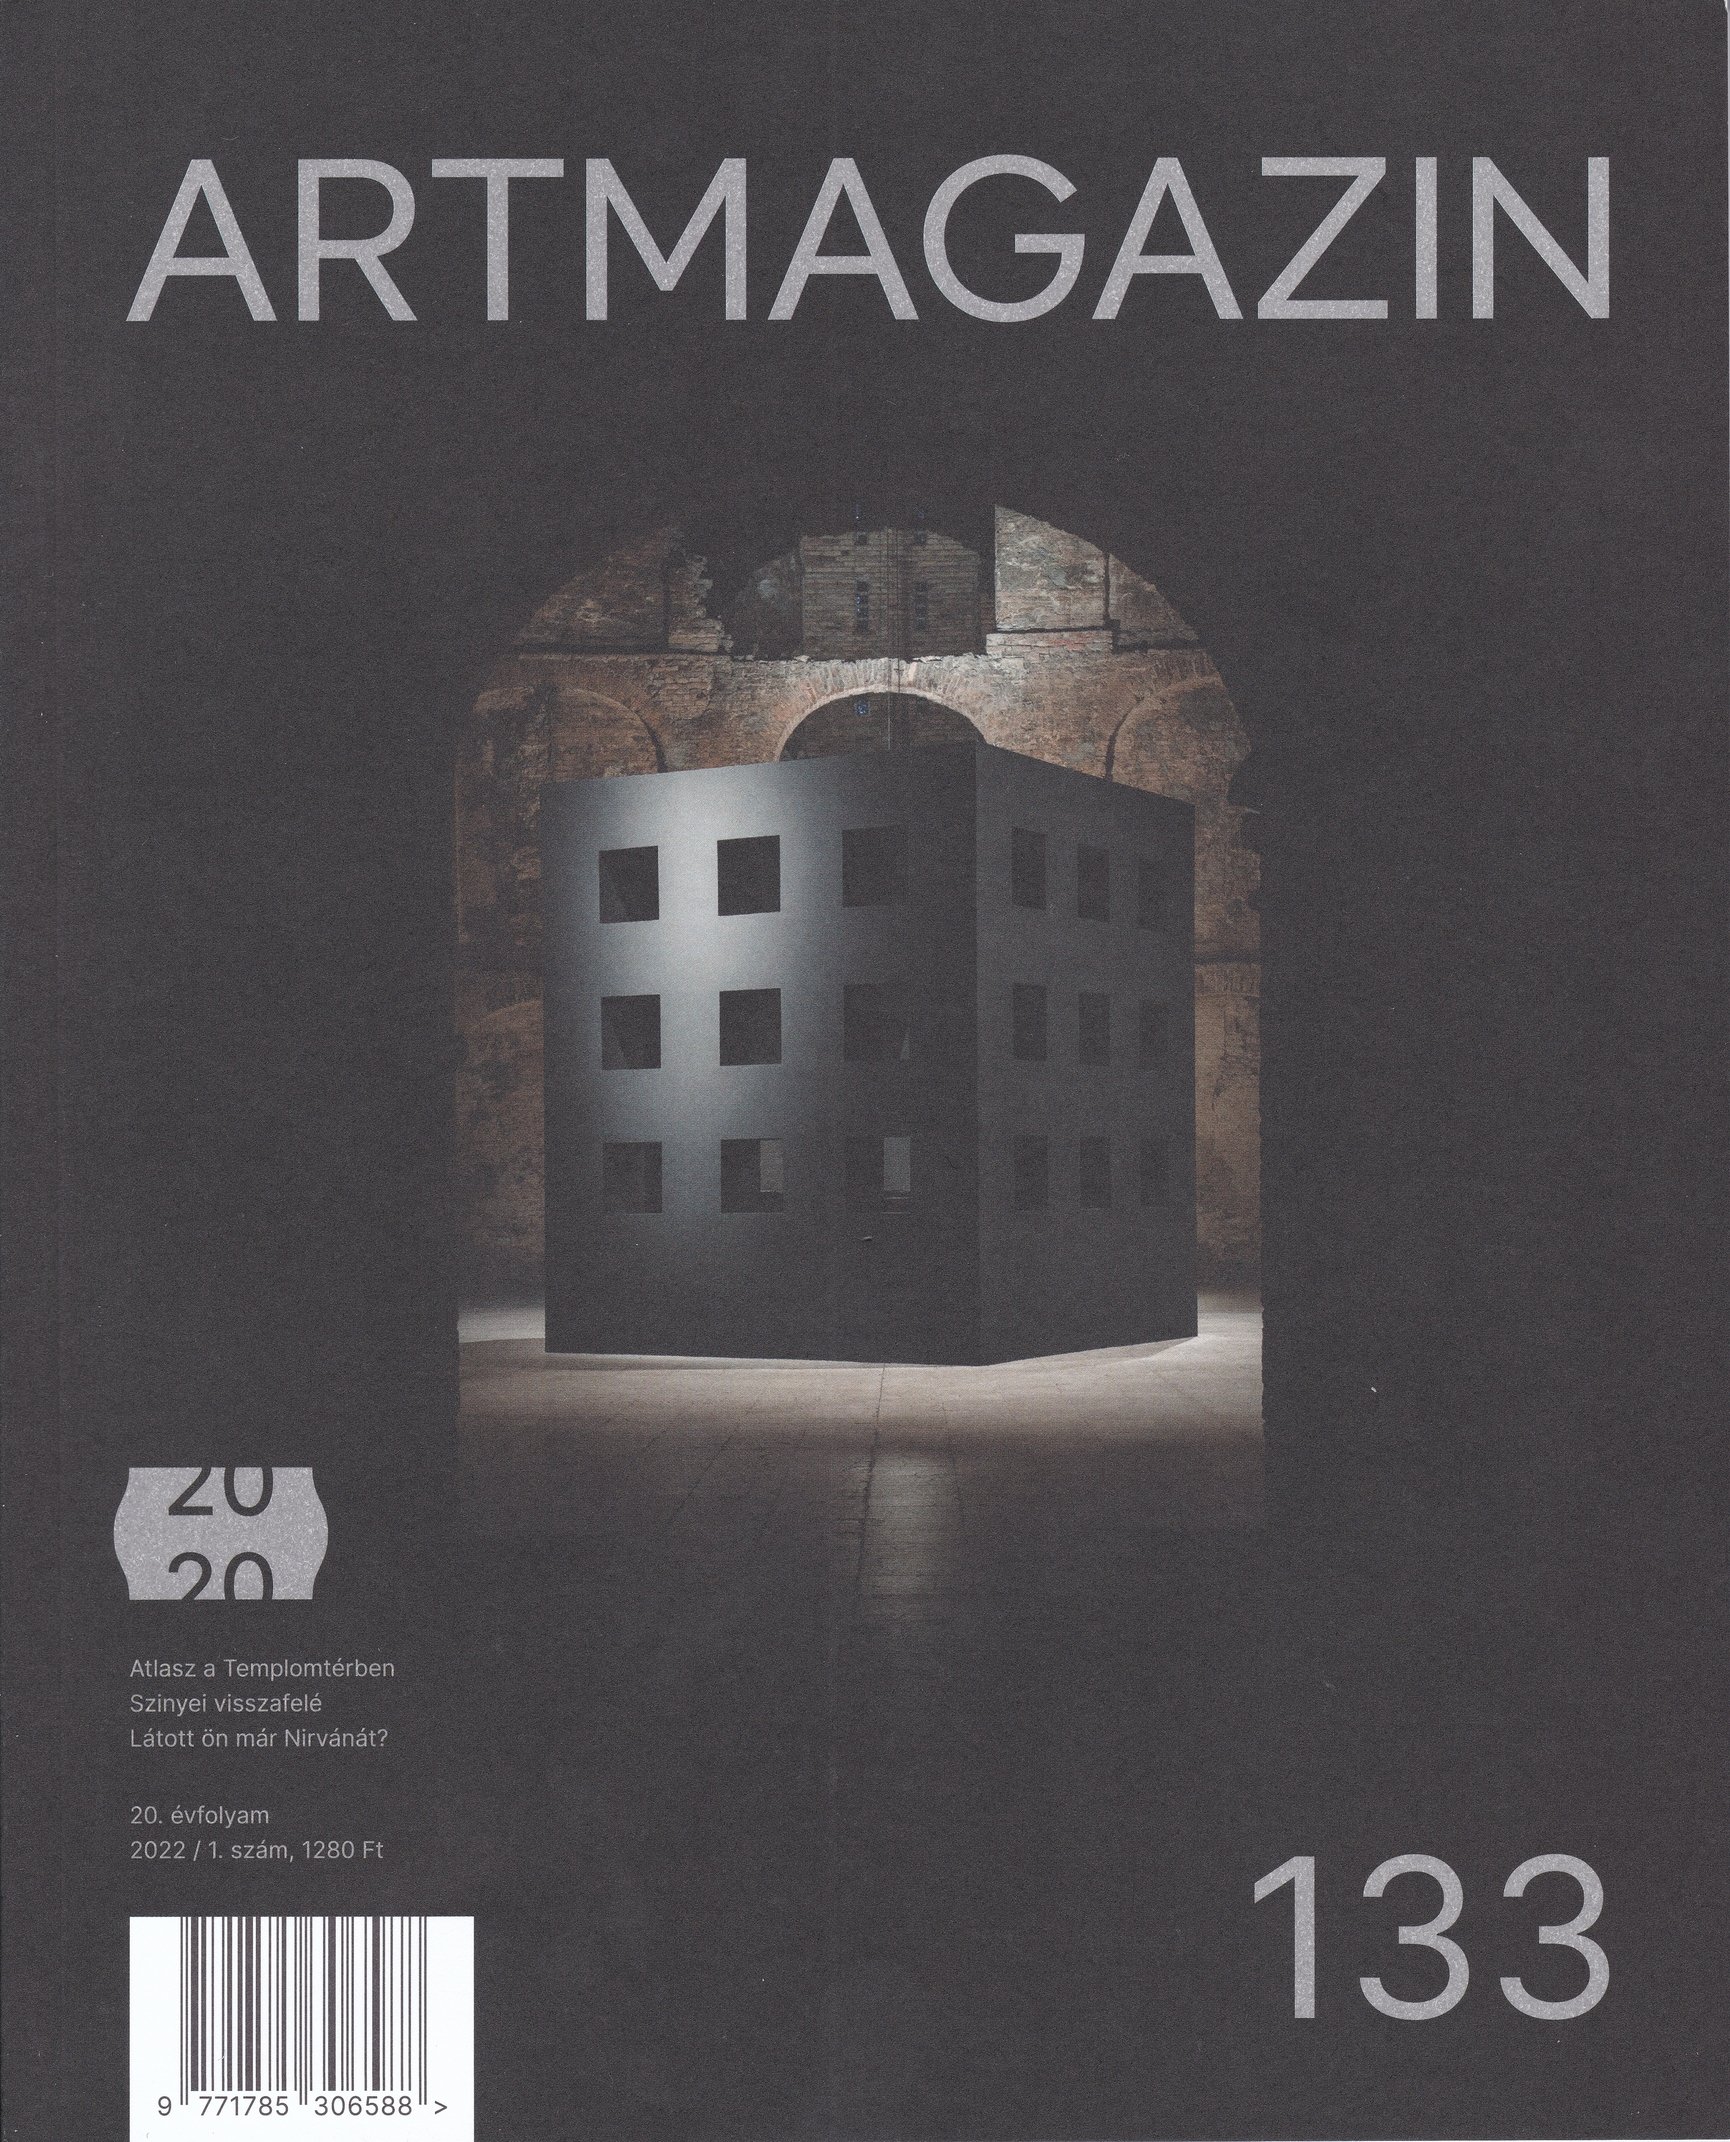 Artmagazin 2022/20. évf. 1. sz. (133.) (Rippl-Rónai Múzeum CC BY-NC-ND)